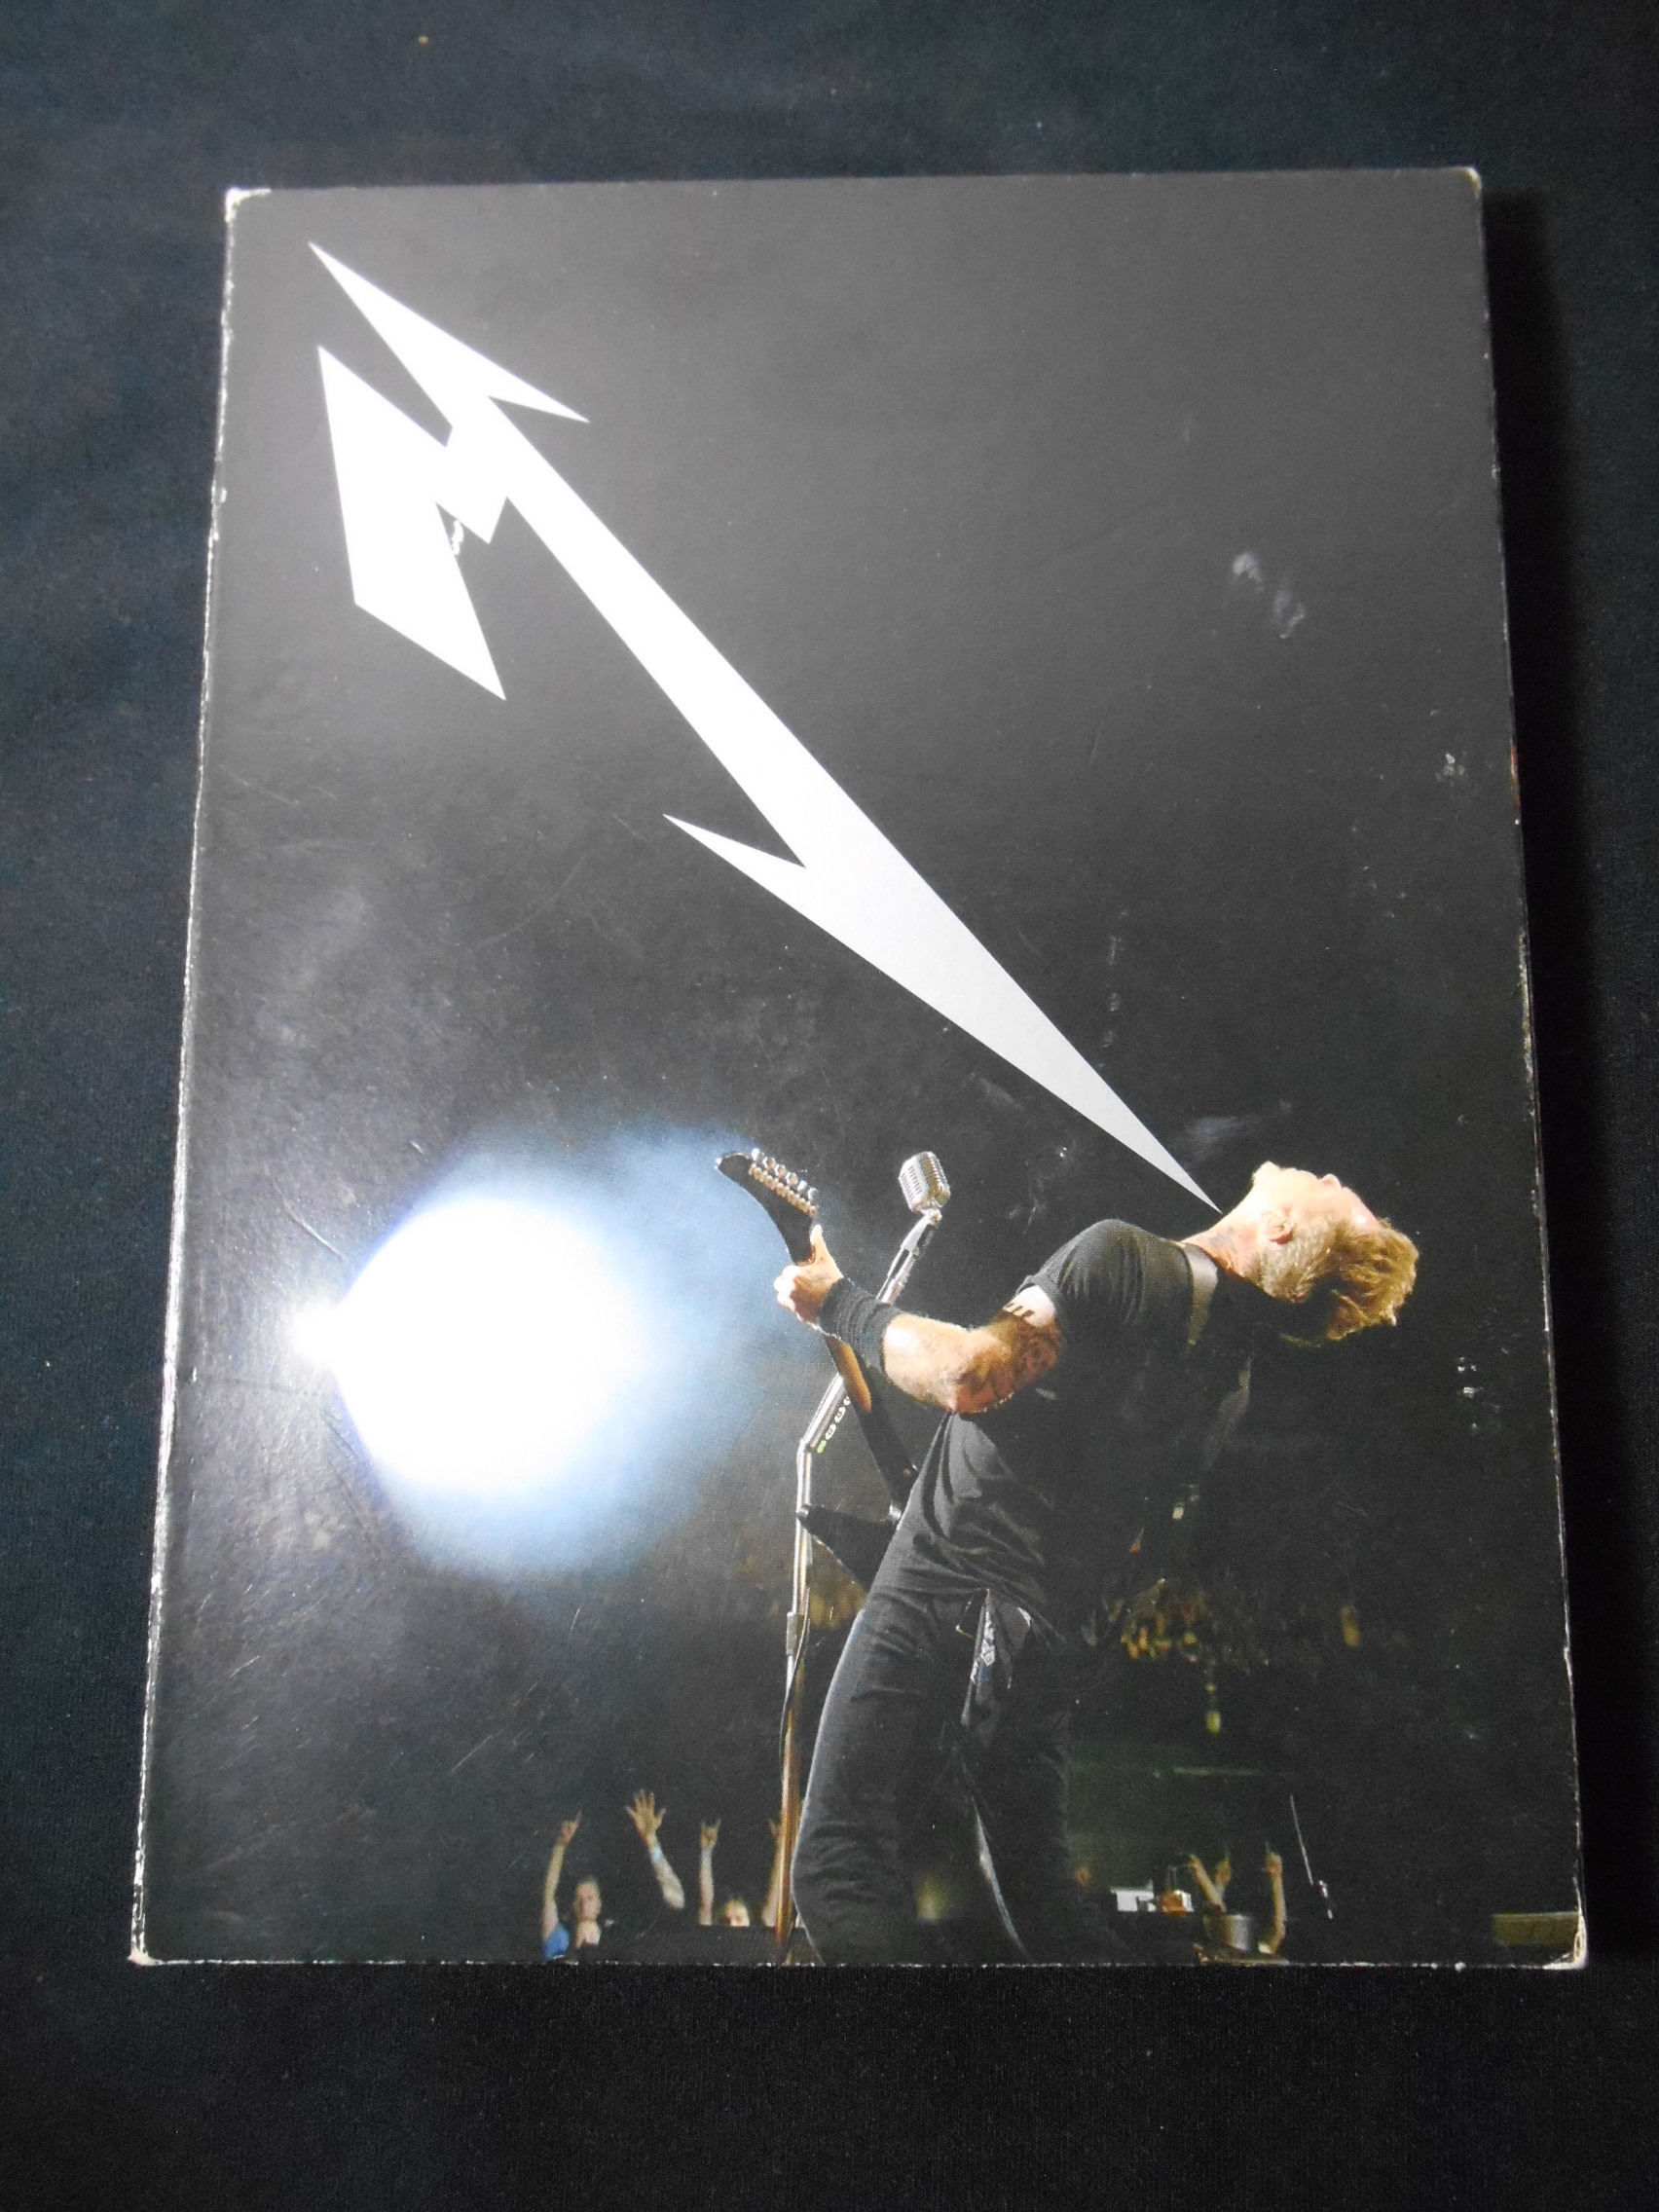 DVD - Metallica - Quebec Magnetic (Duplo/Digipack)